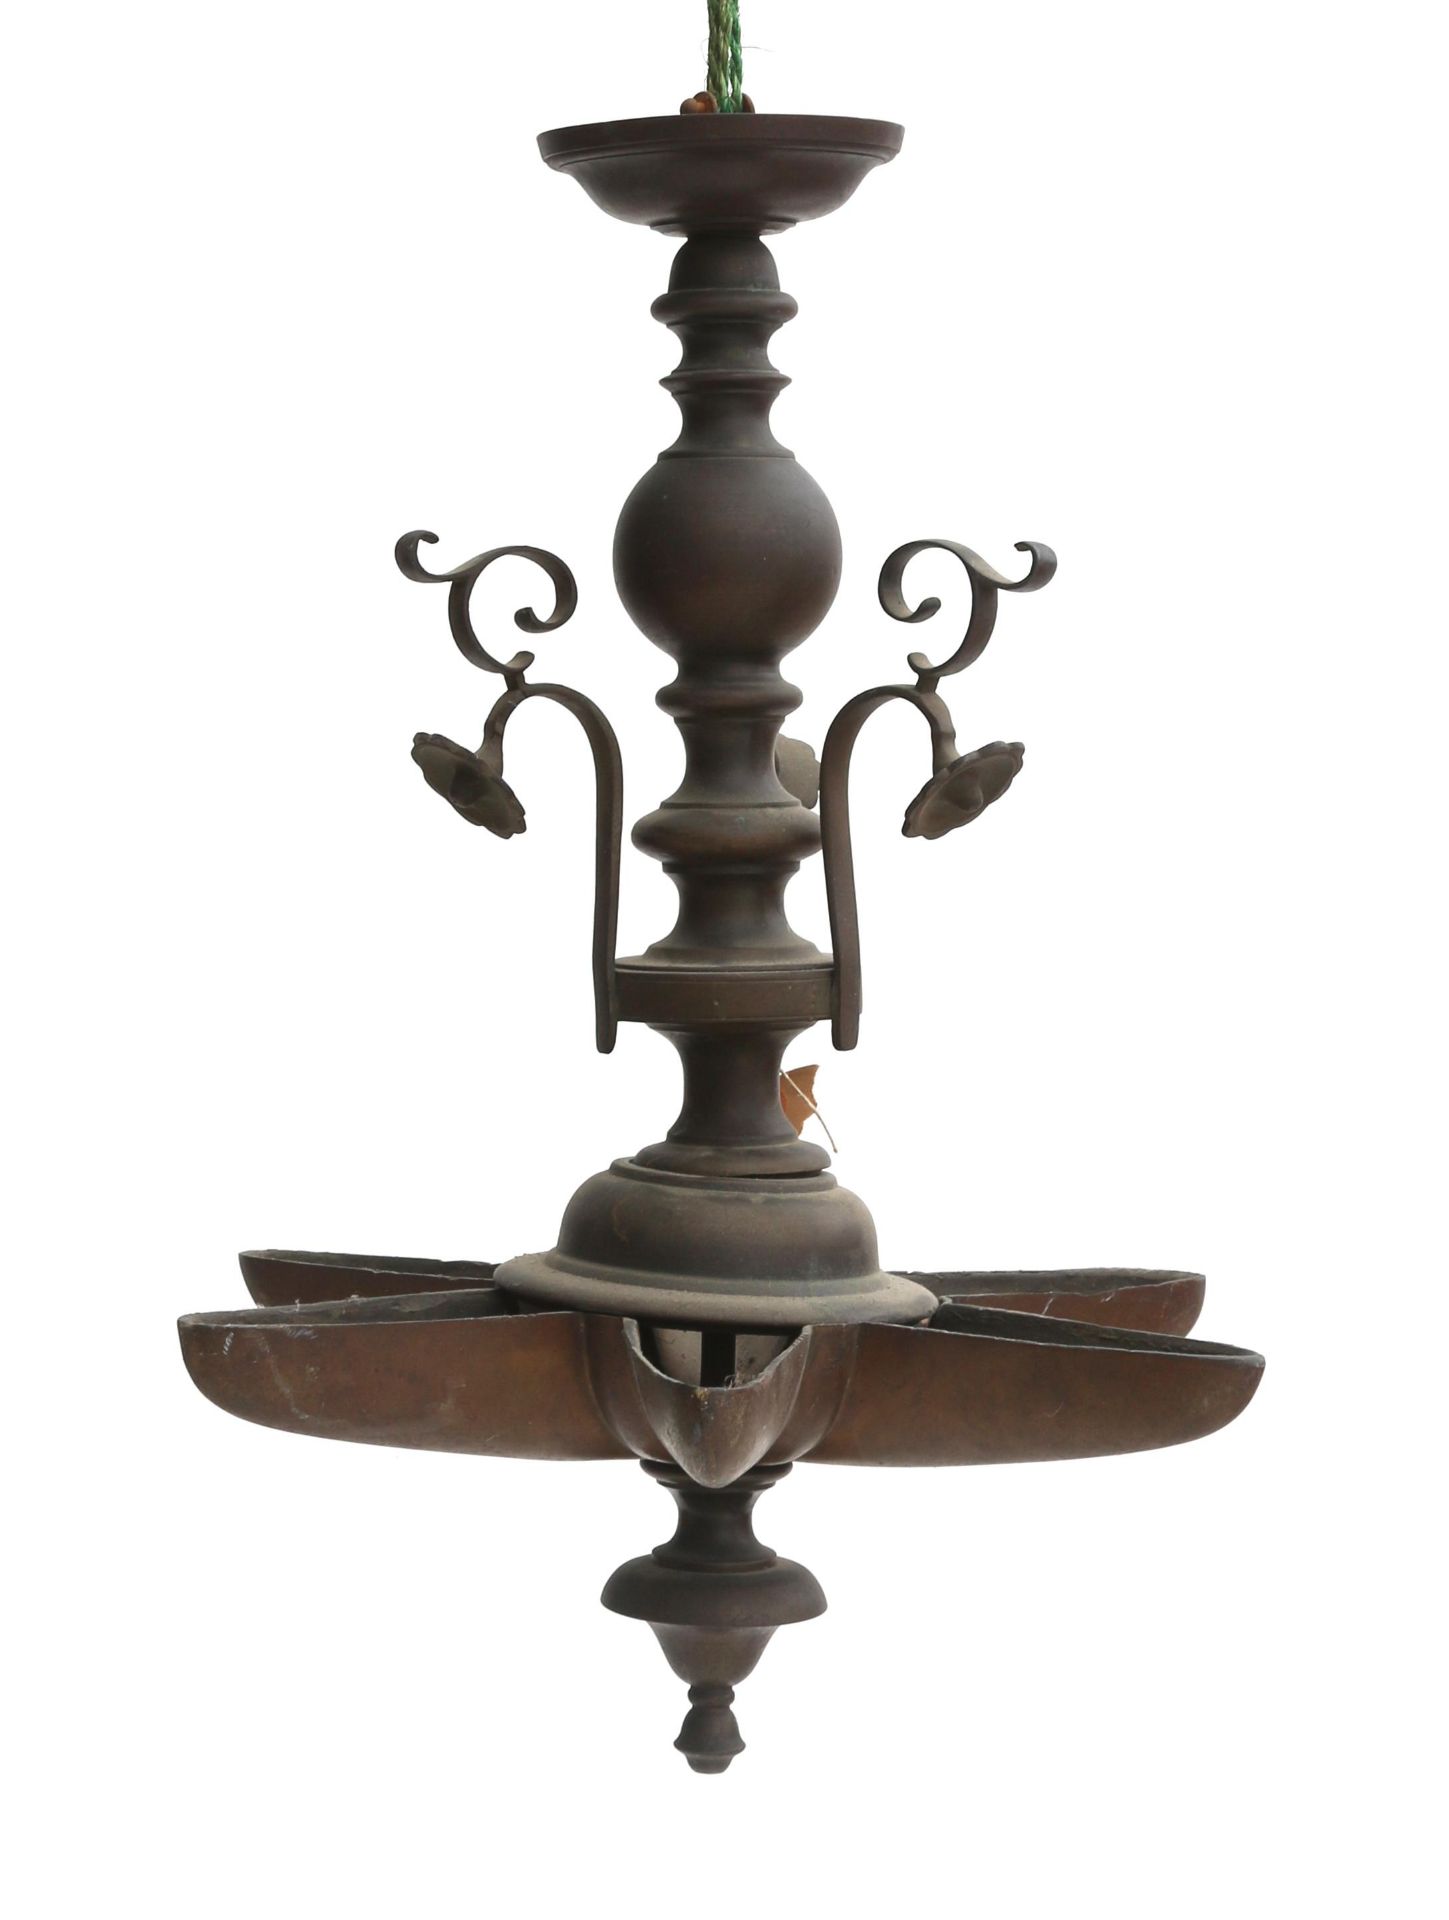 A bronze Shabbat lamp. Germany, 19th century.